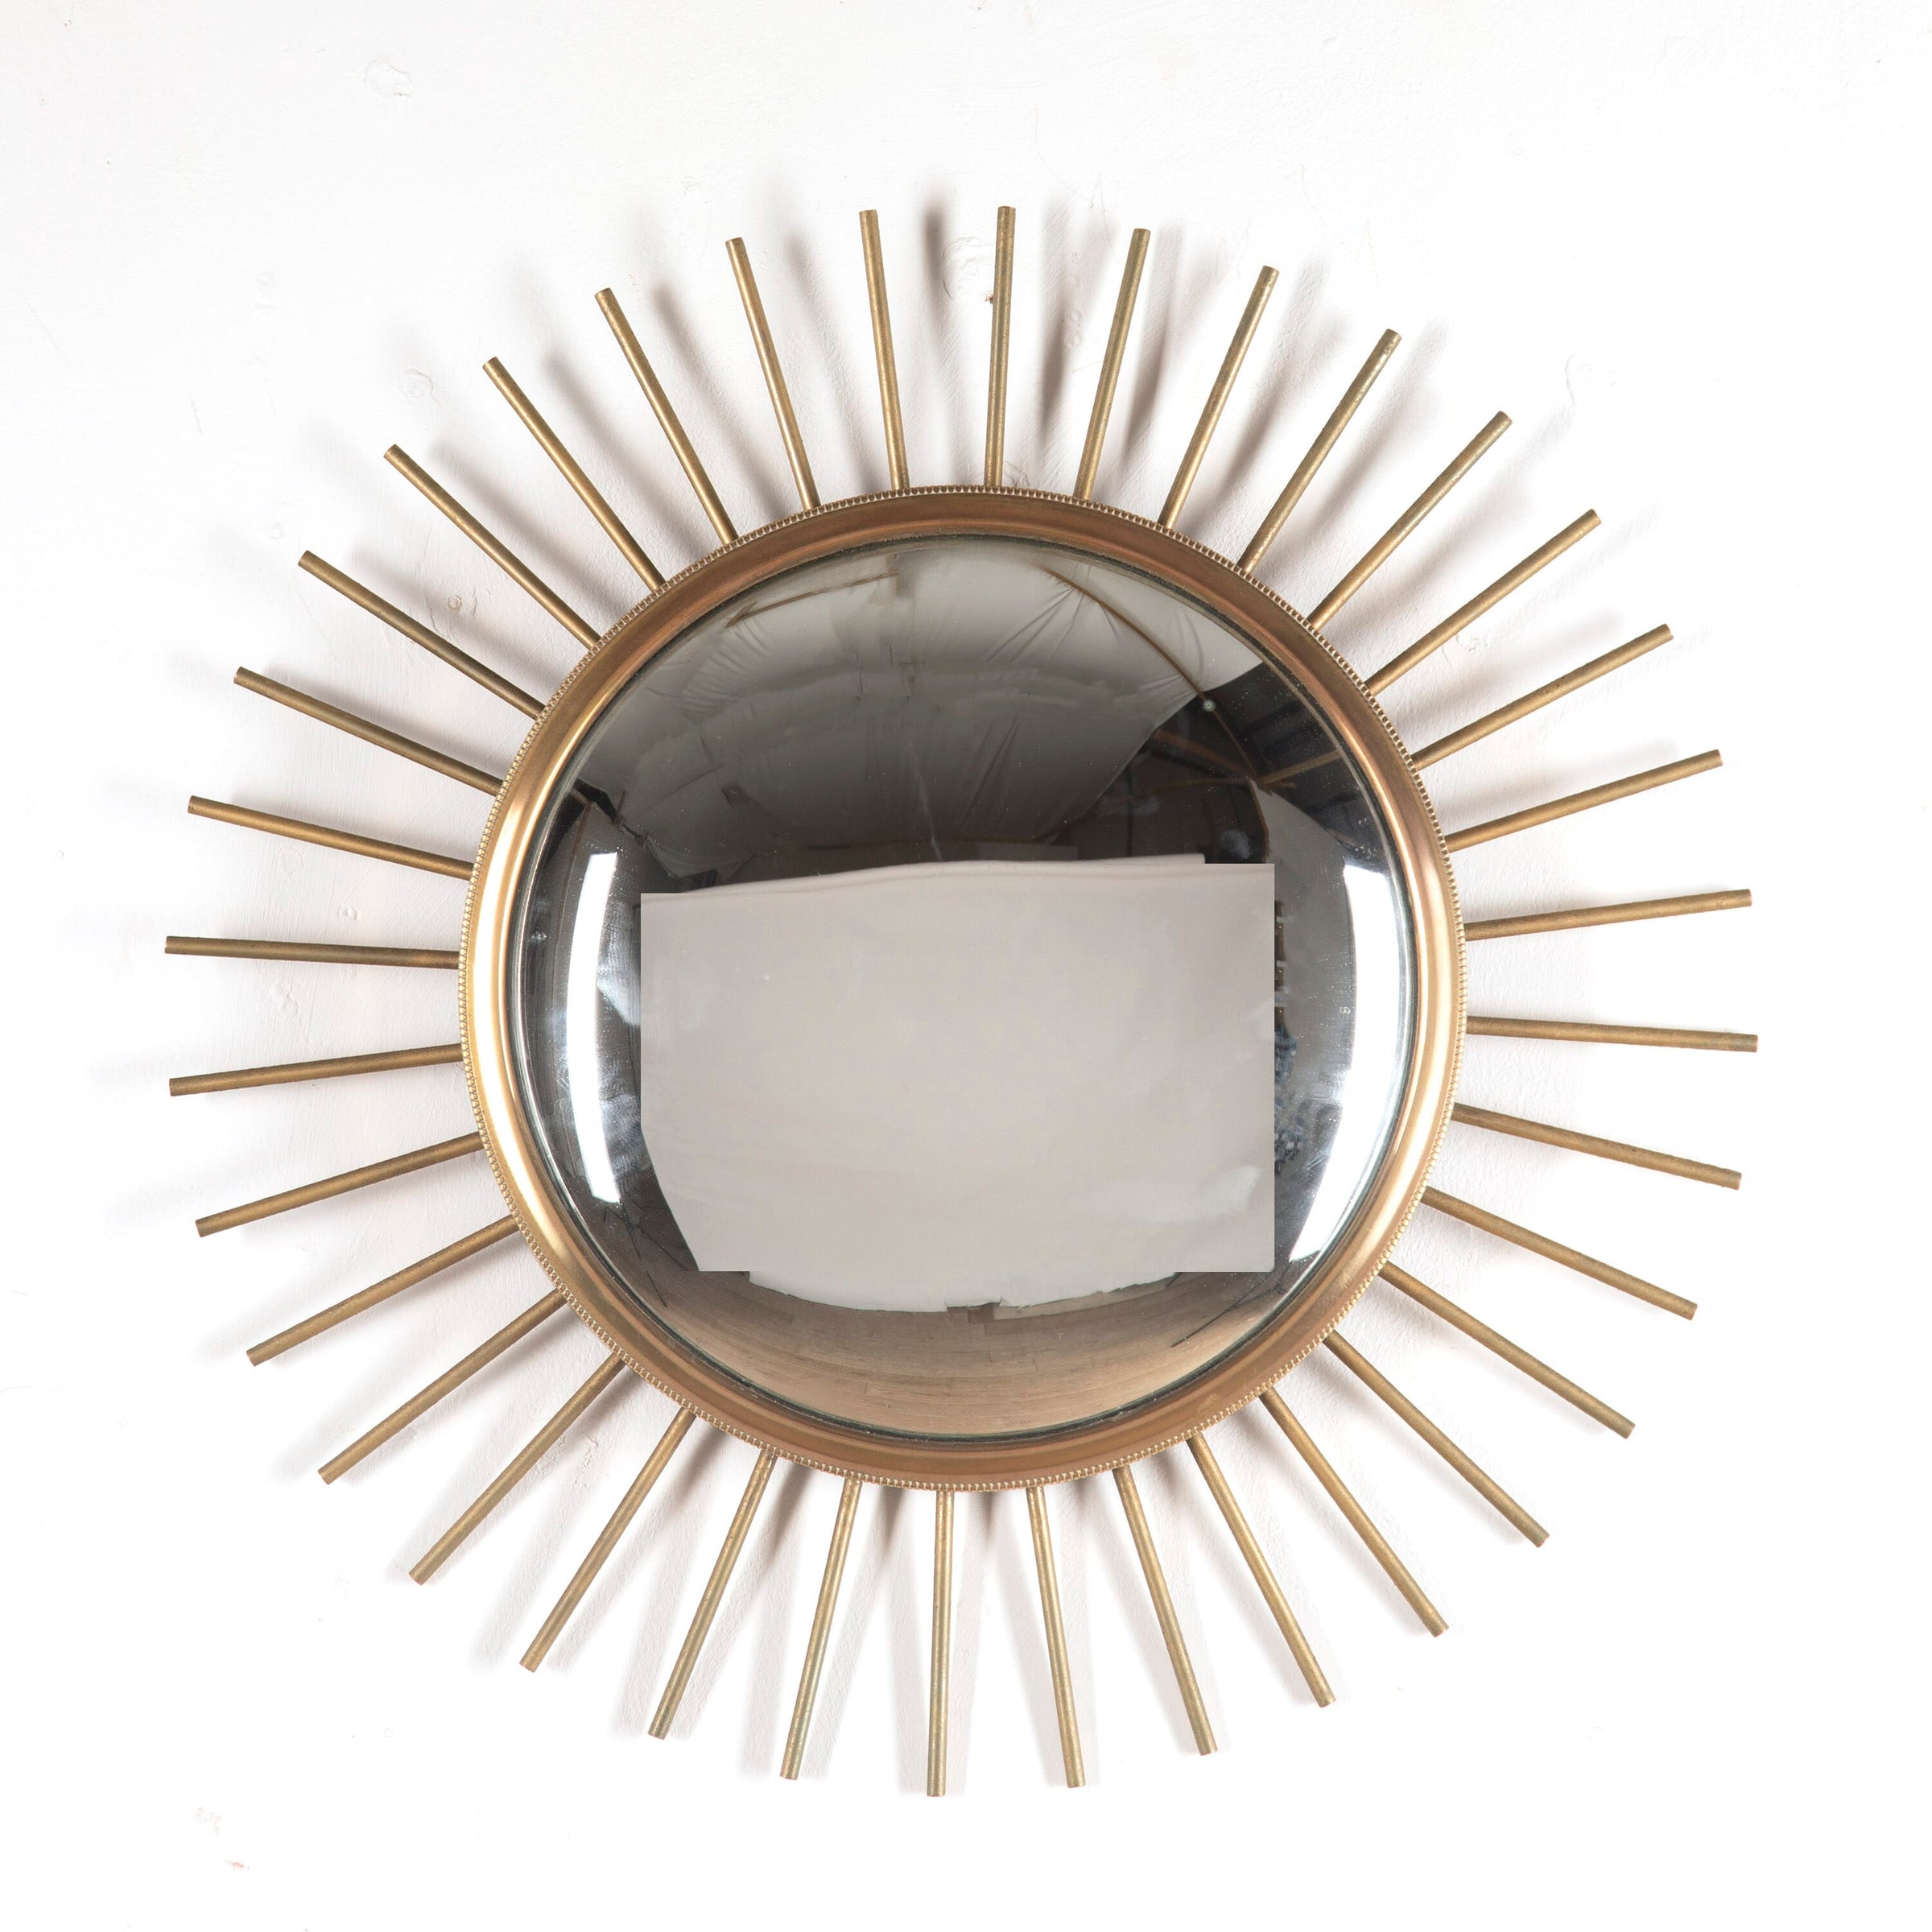 Vintage Convex Sunray Mirror – Vintage Sunburst Mirror - Convex Mirror - Vintage Mirror -Mirrors -French Antique Mirror - AD & PS Antiques